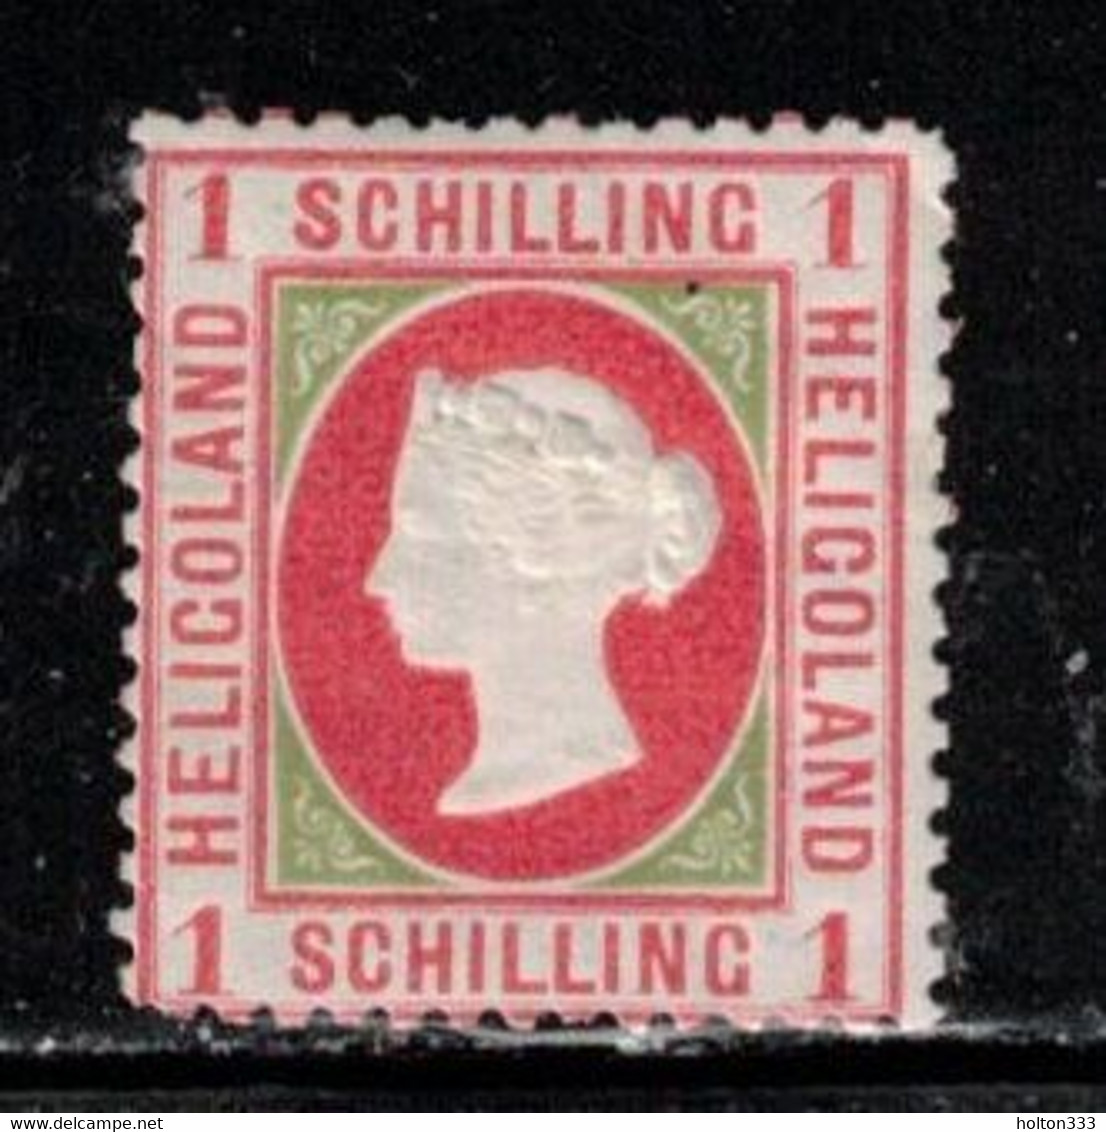 HELIGOLAND Scott # 11 MH - Probable Reprint Listed At 10% Of CV ($210) - Heligoland (1867-1890)